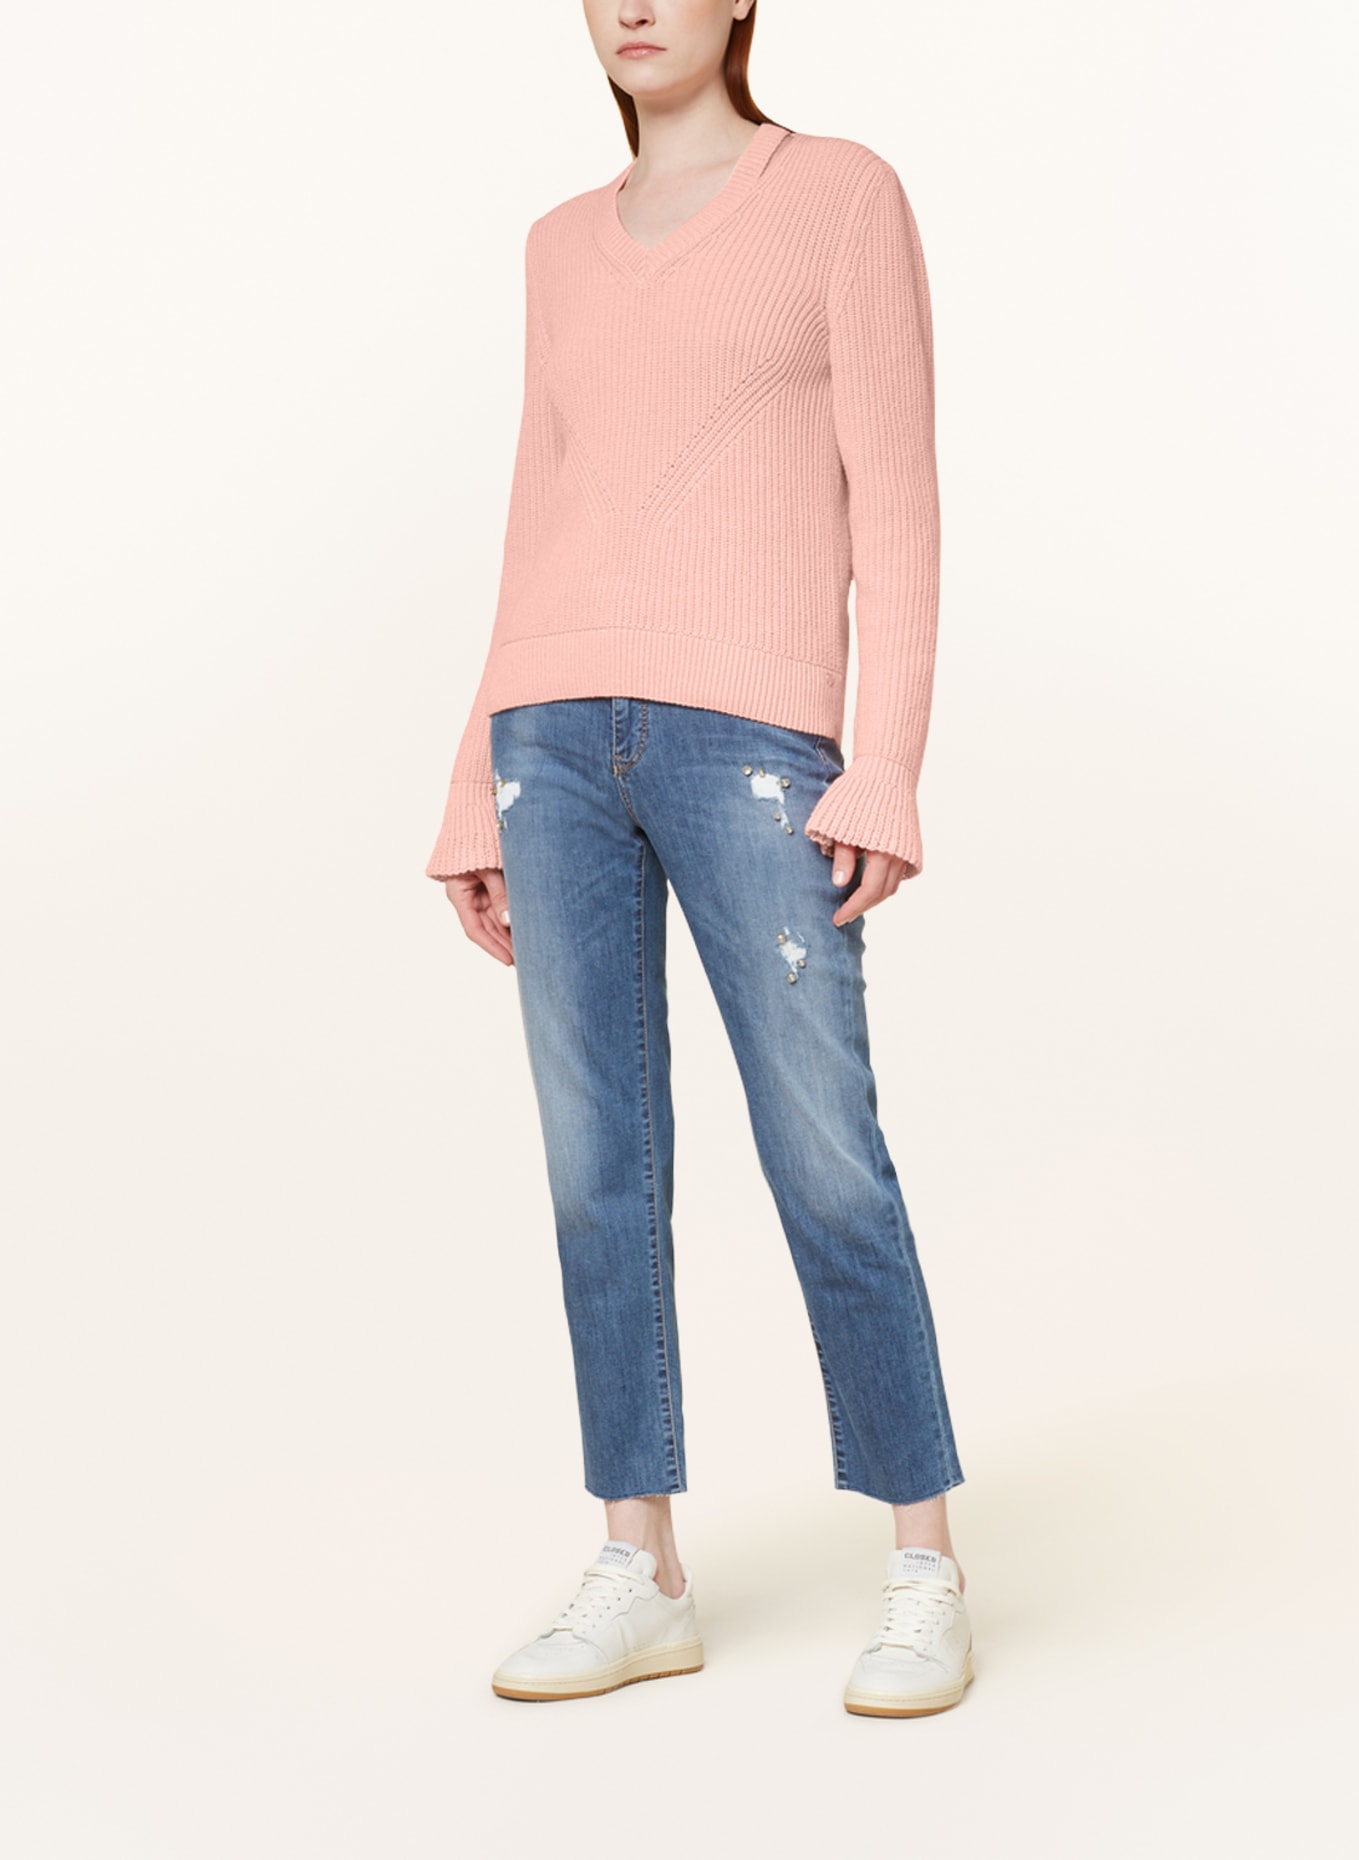 MARC CAIN Pullover, Farbe: 210 soft powder pink (Bild 2)